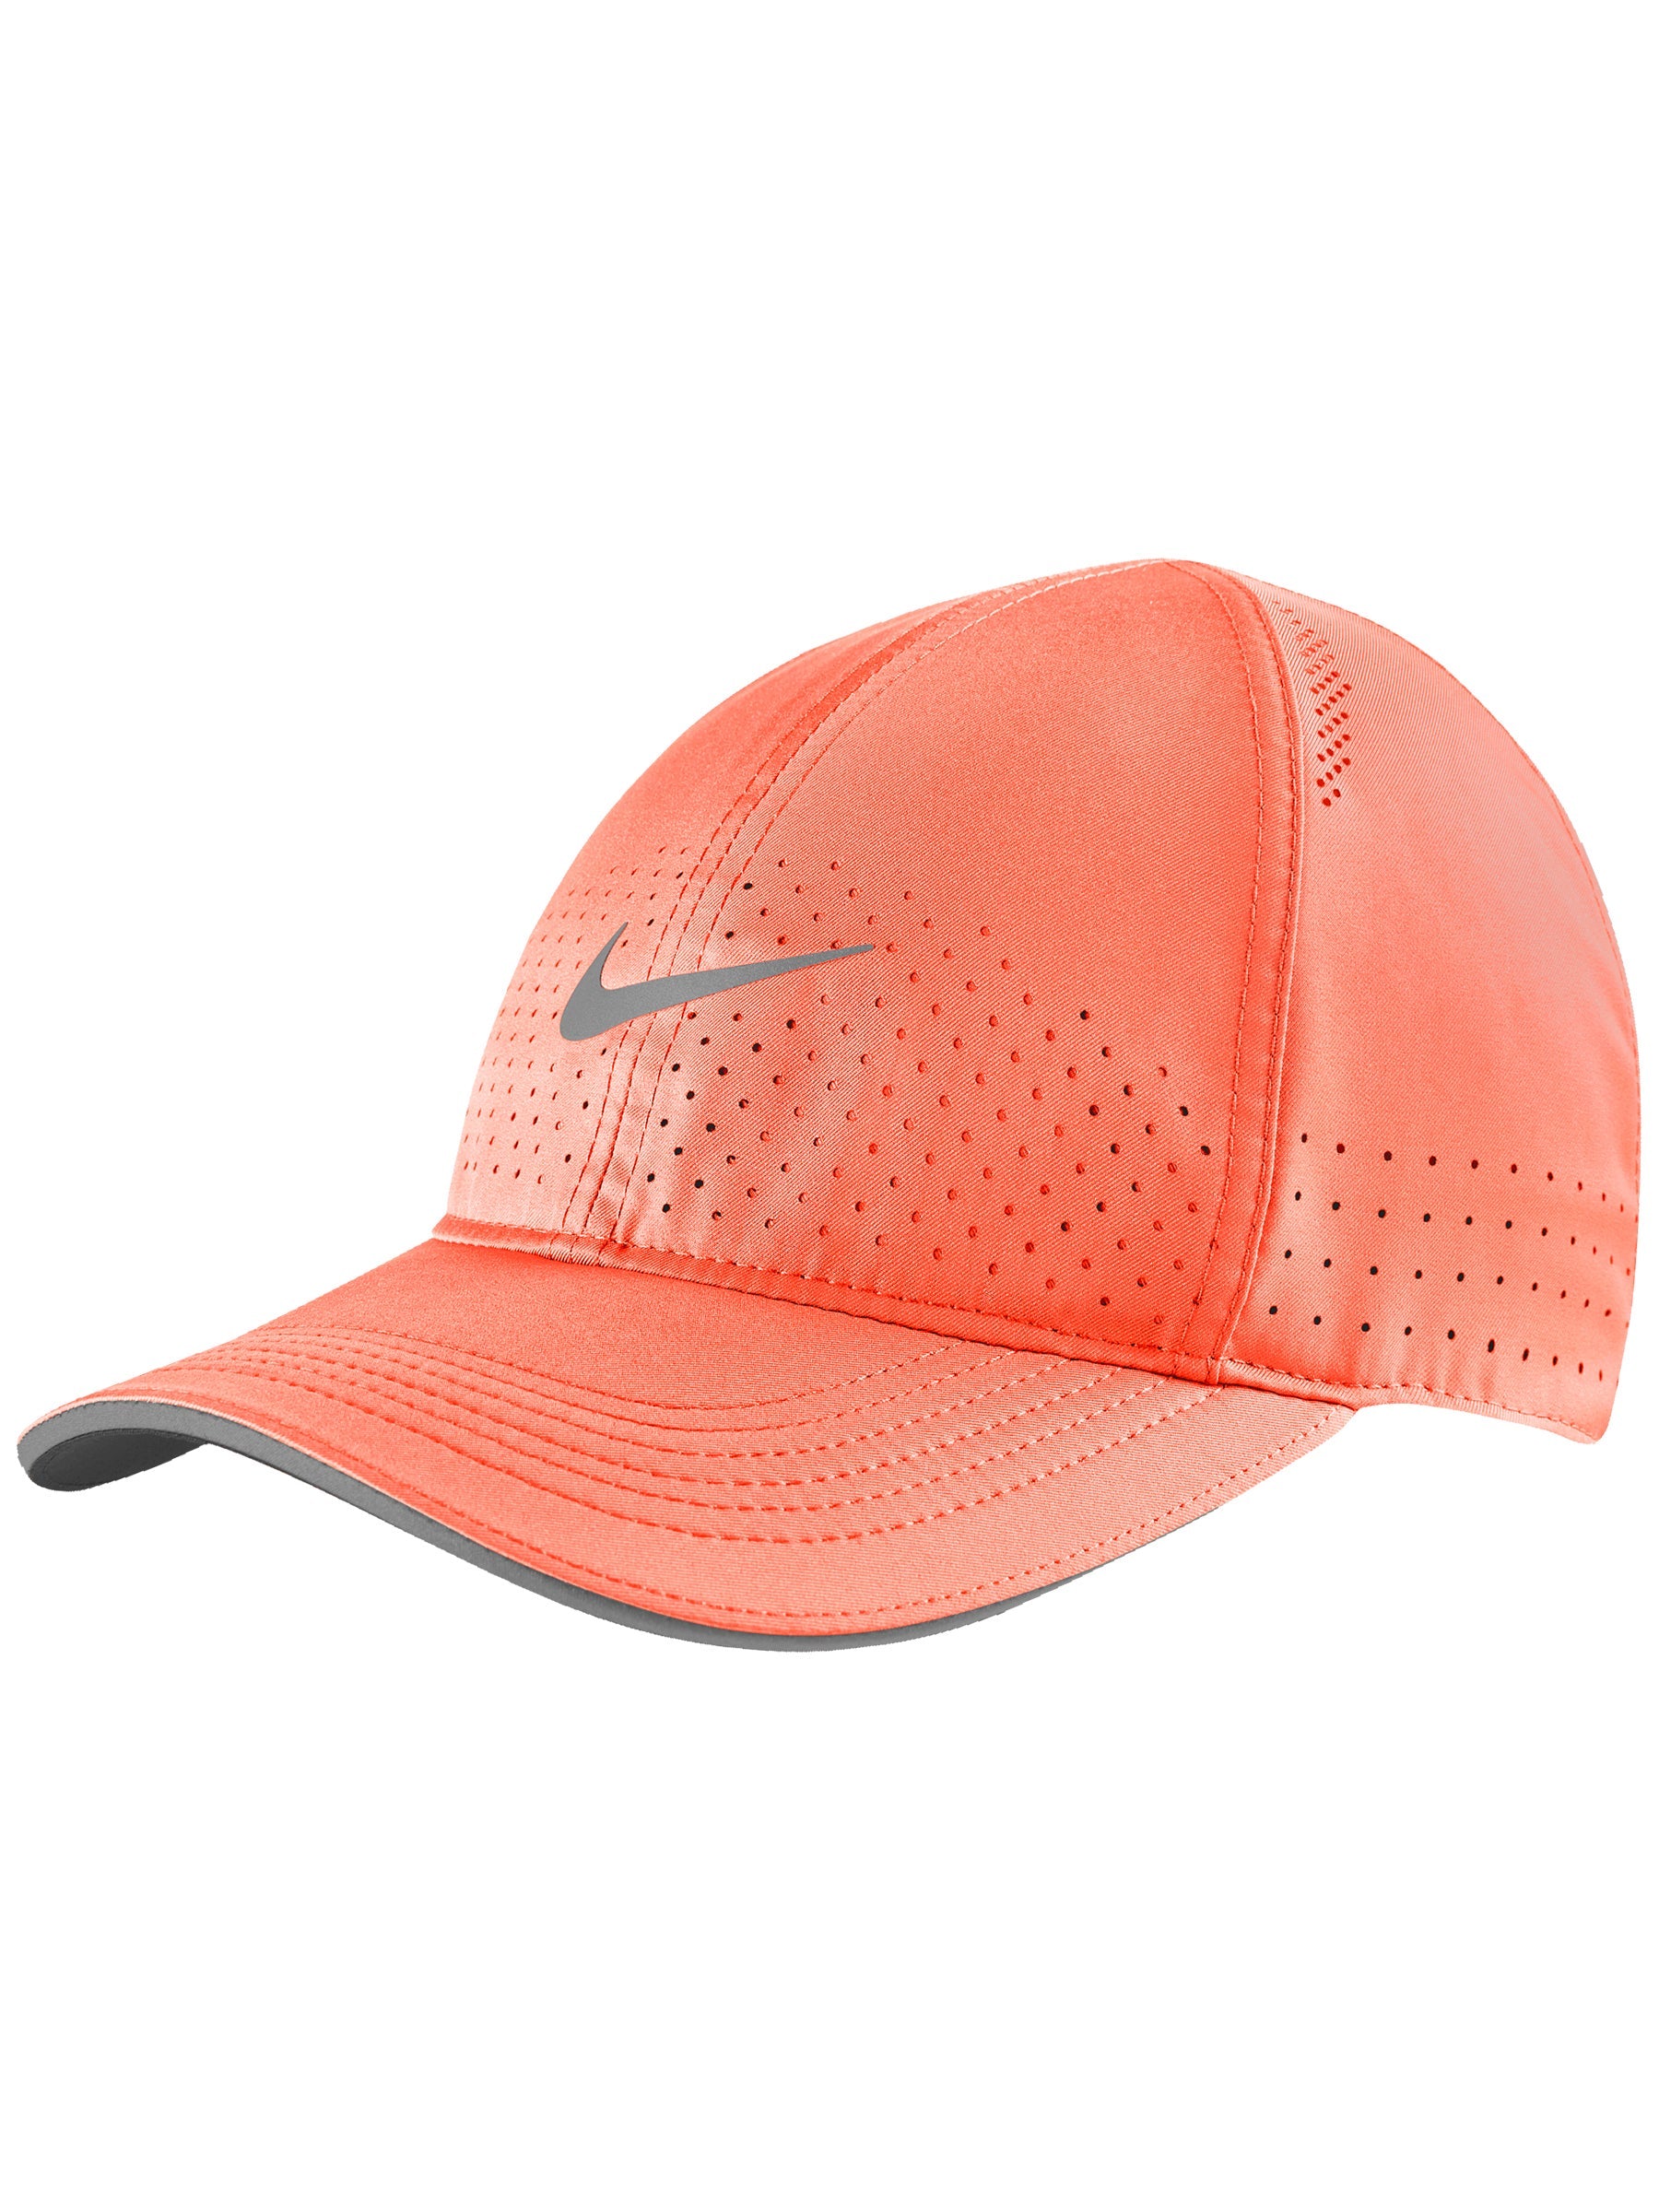 Nike Tennis - AeroBill Featherlight Logo-Print Dri-FIT Tennis Cap